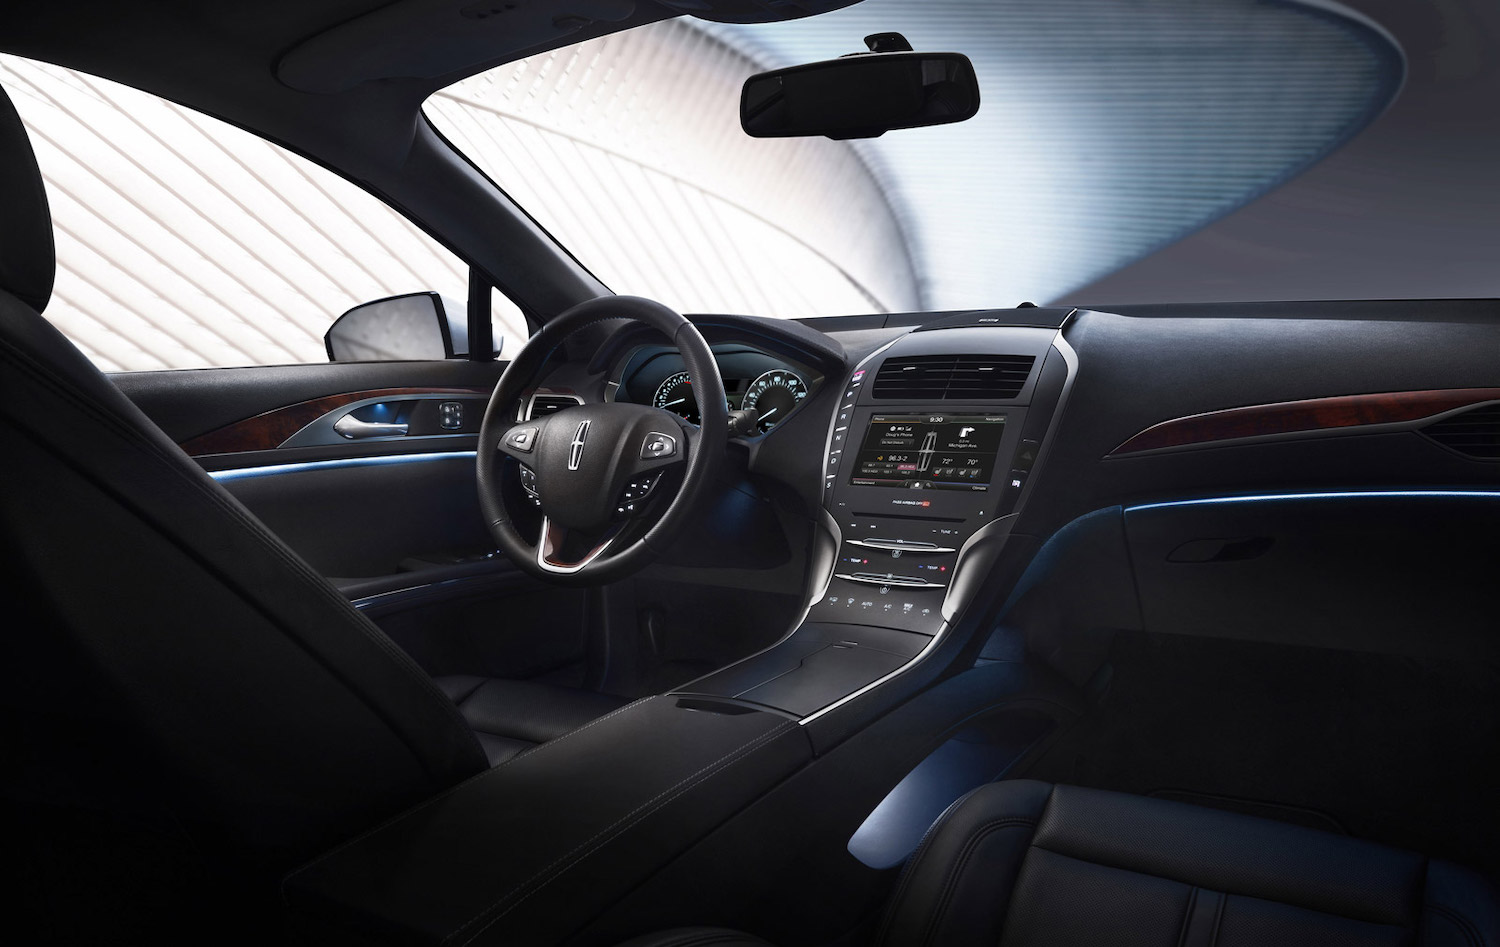 2013 Lincoln MKZ Hybrid Among Best Used Vehicles Under $15K